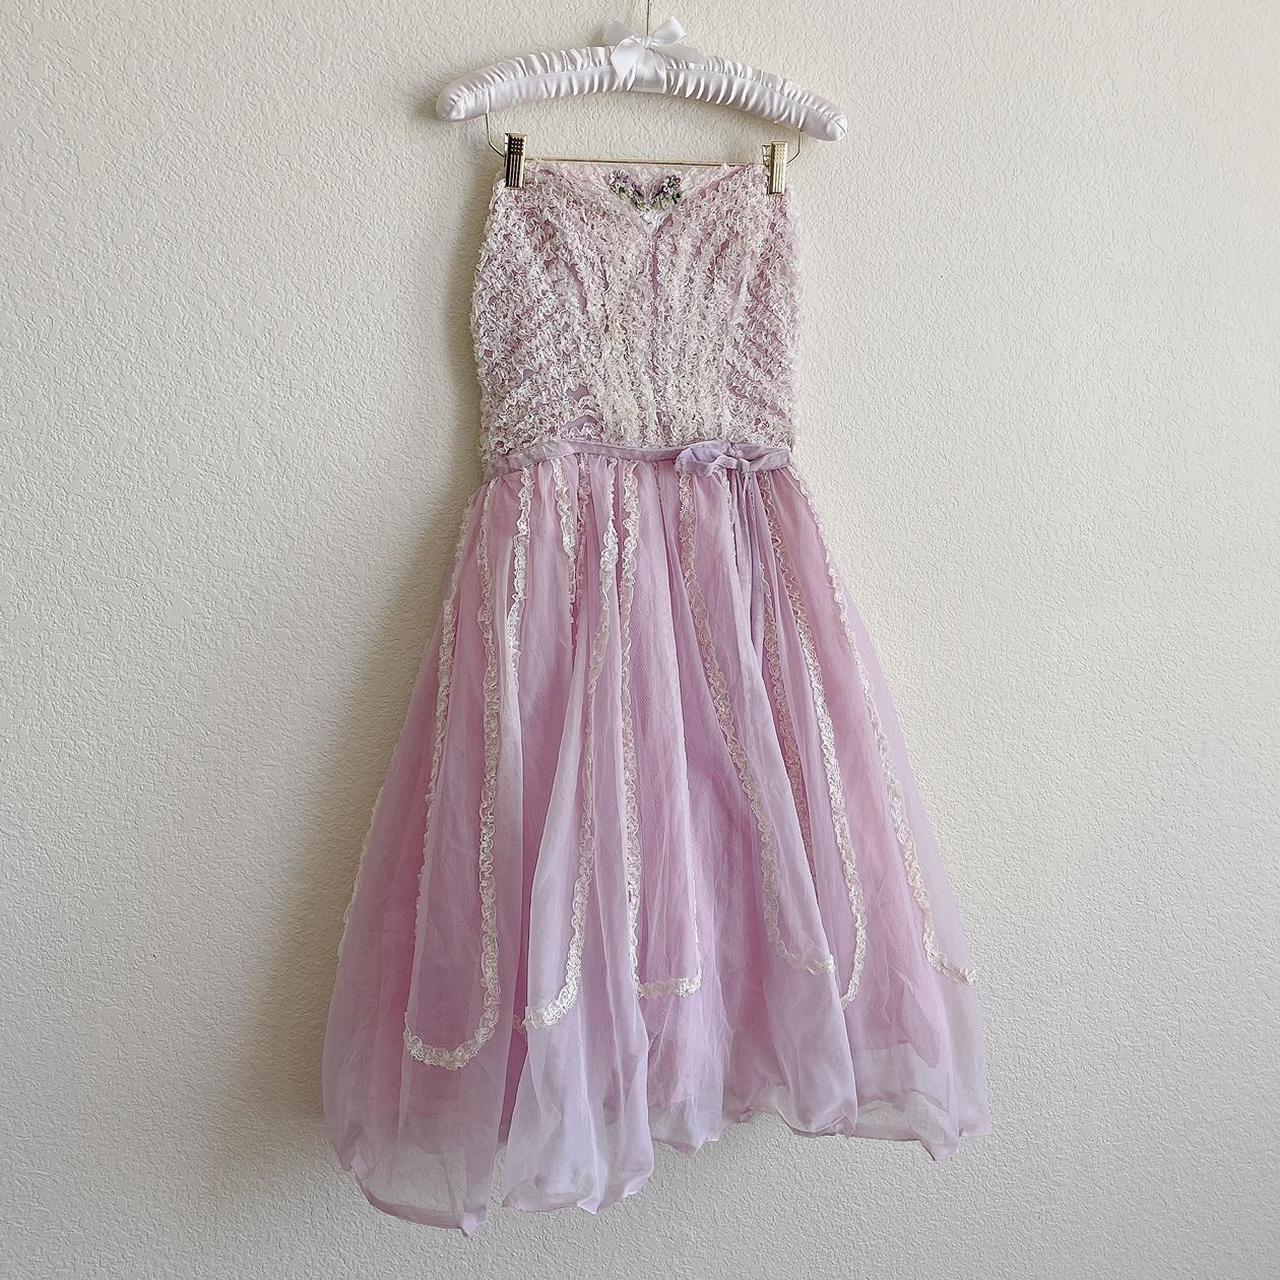 Vintage ethereal 1950s lavender lace prom dress ♡ in... - Depop